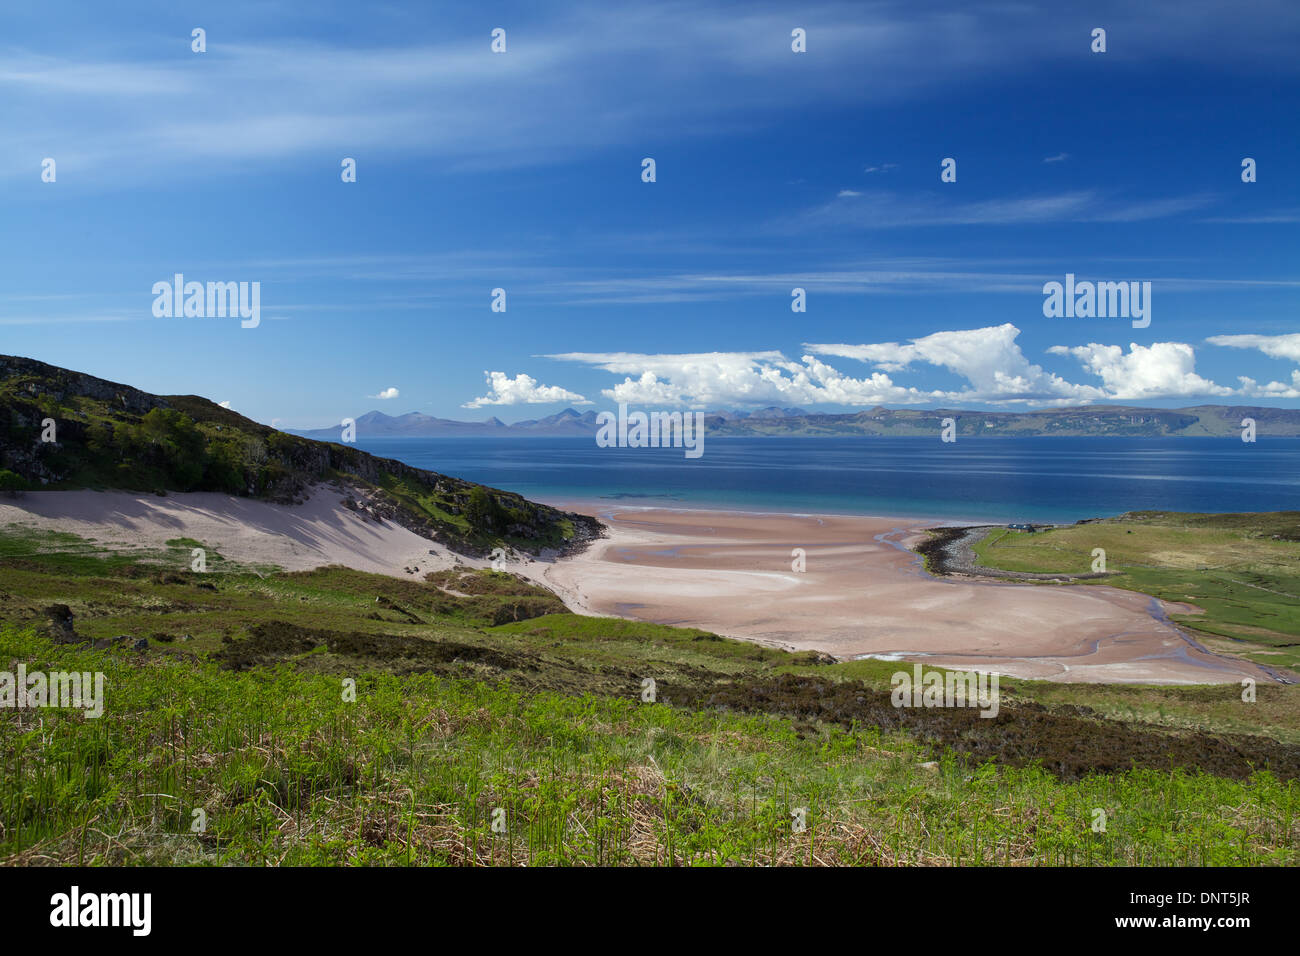 Monty Halls Gesprengte Ketten, einer tv-Sendung in Applecross, Wester Ross, Sand Bay, North West Highlands, Schottland gedreht. Stockfoto